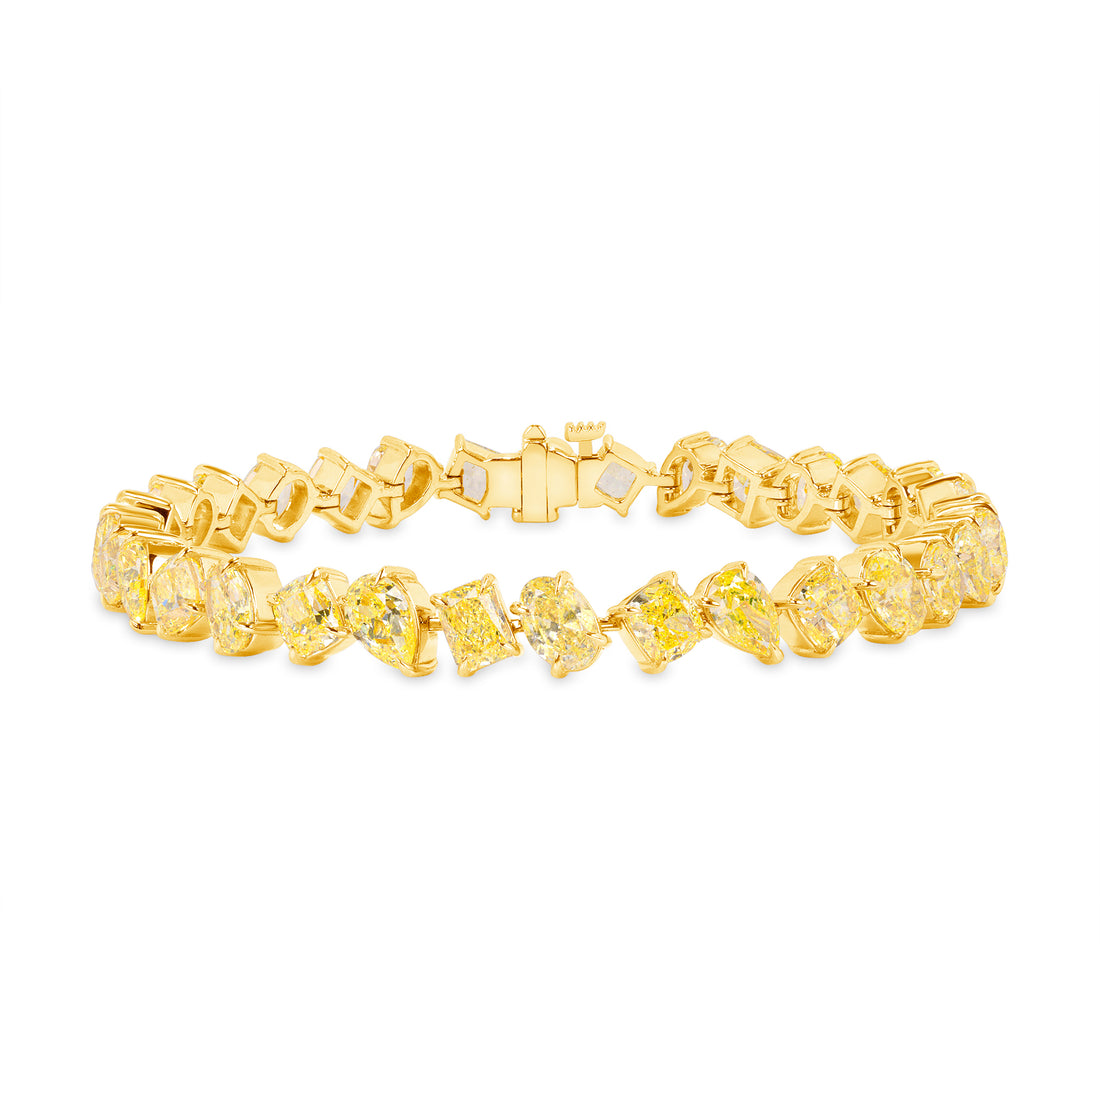 17.78 CT. Mixed Cut Fancy Yellow Diamond Tennis Bracelet in 18K Yellow Gold